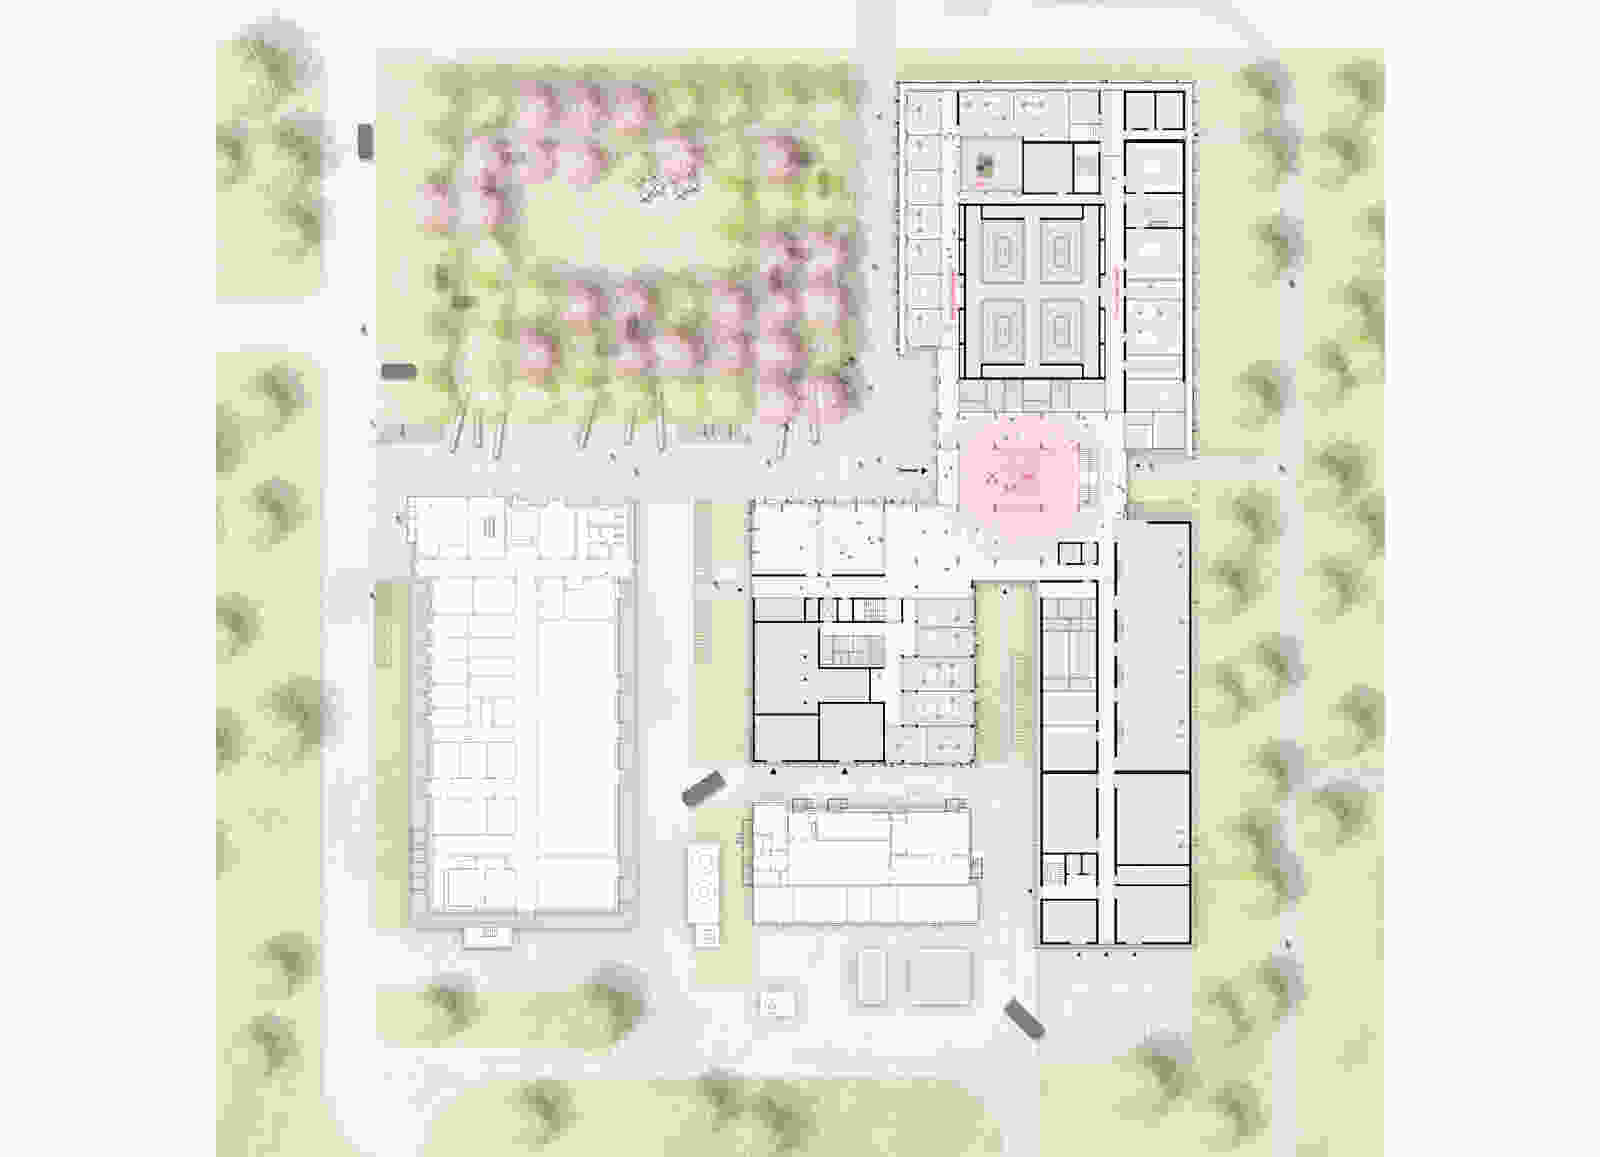 503 dmaa Helmholtz Quantum Center plan a ground floor plan